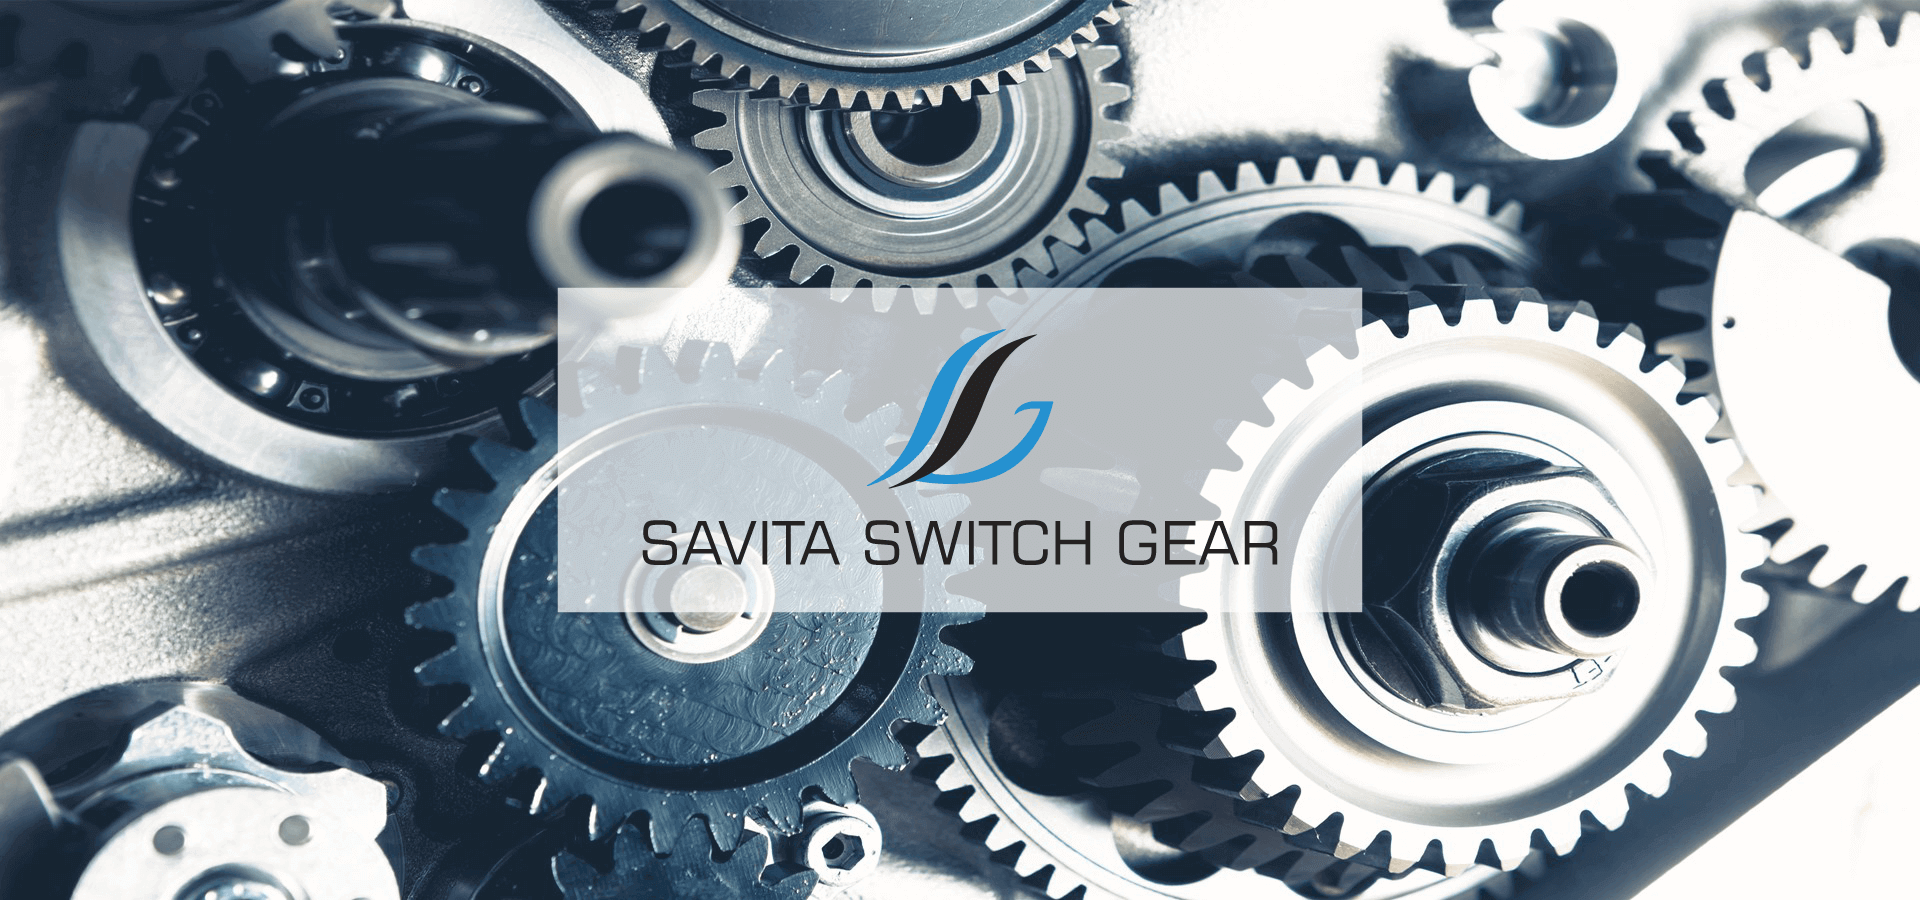 Savita Switch Gear